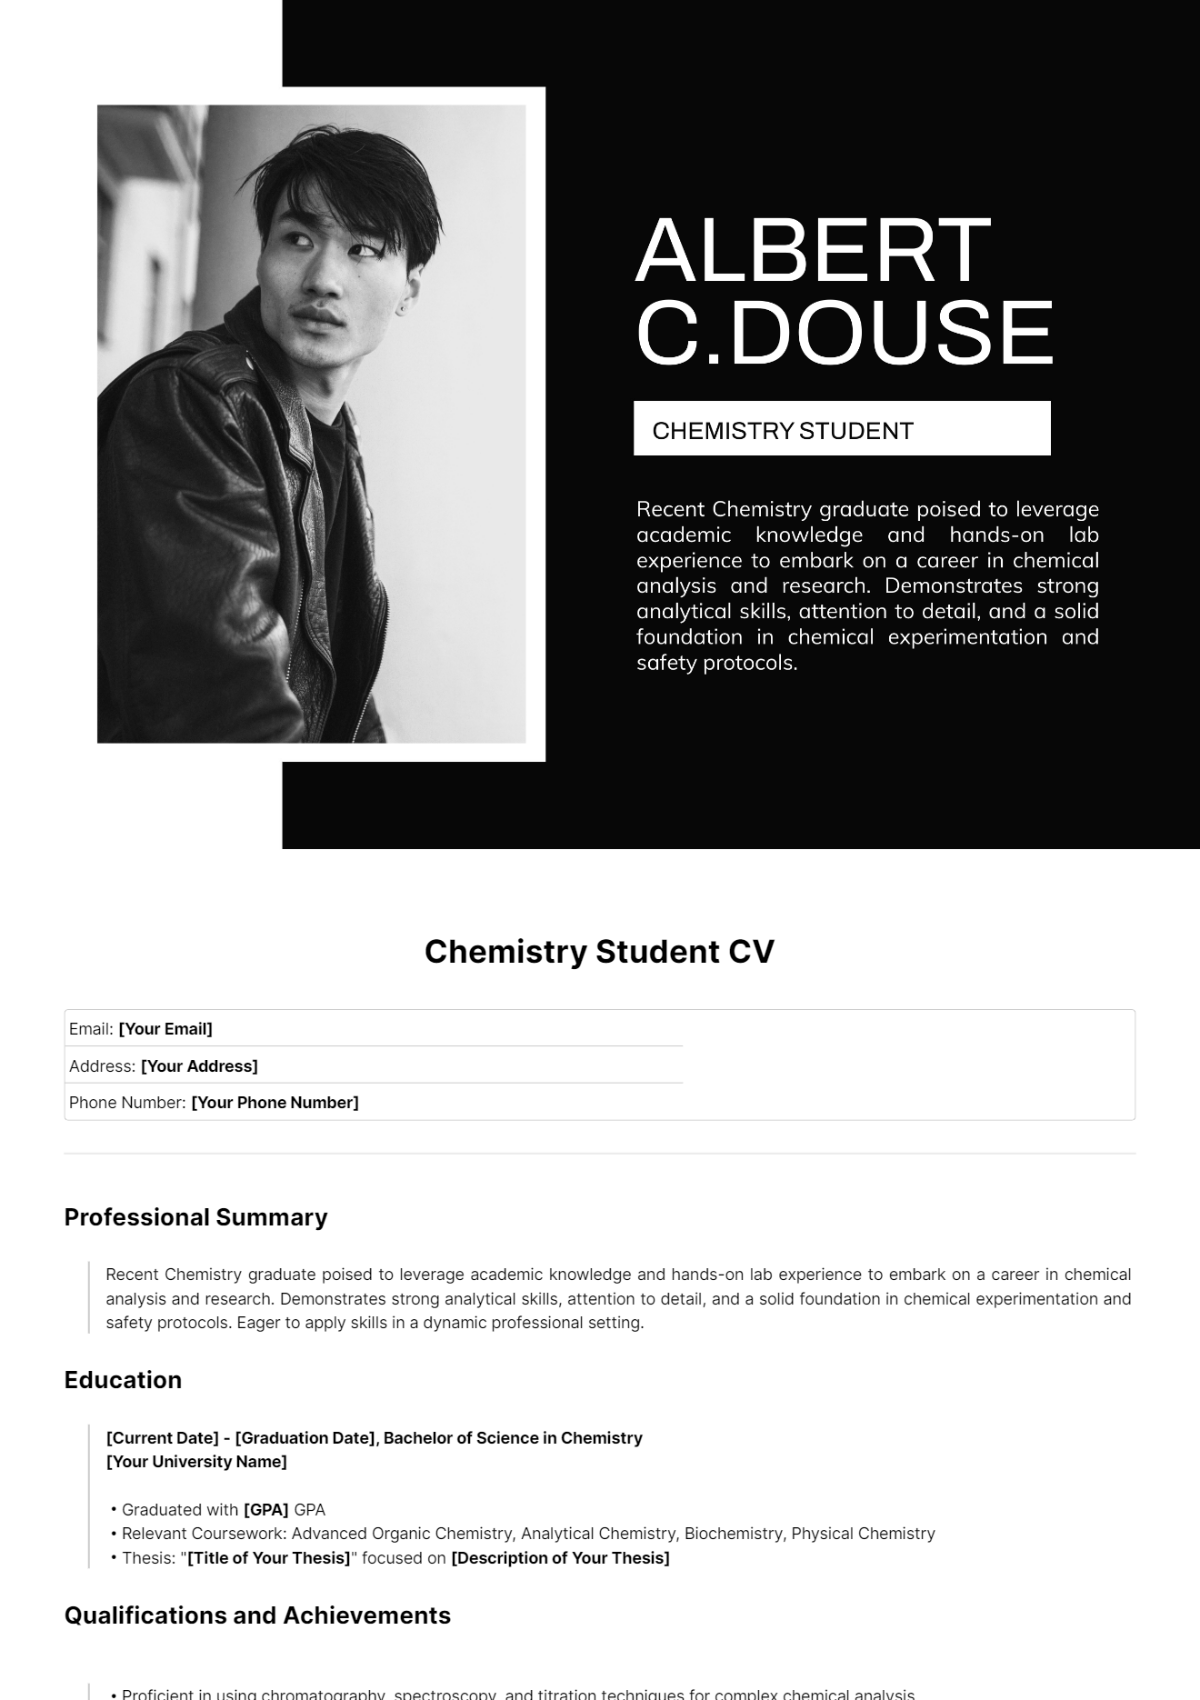 Chemistry Student CV Template